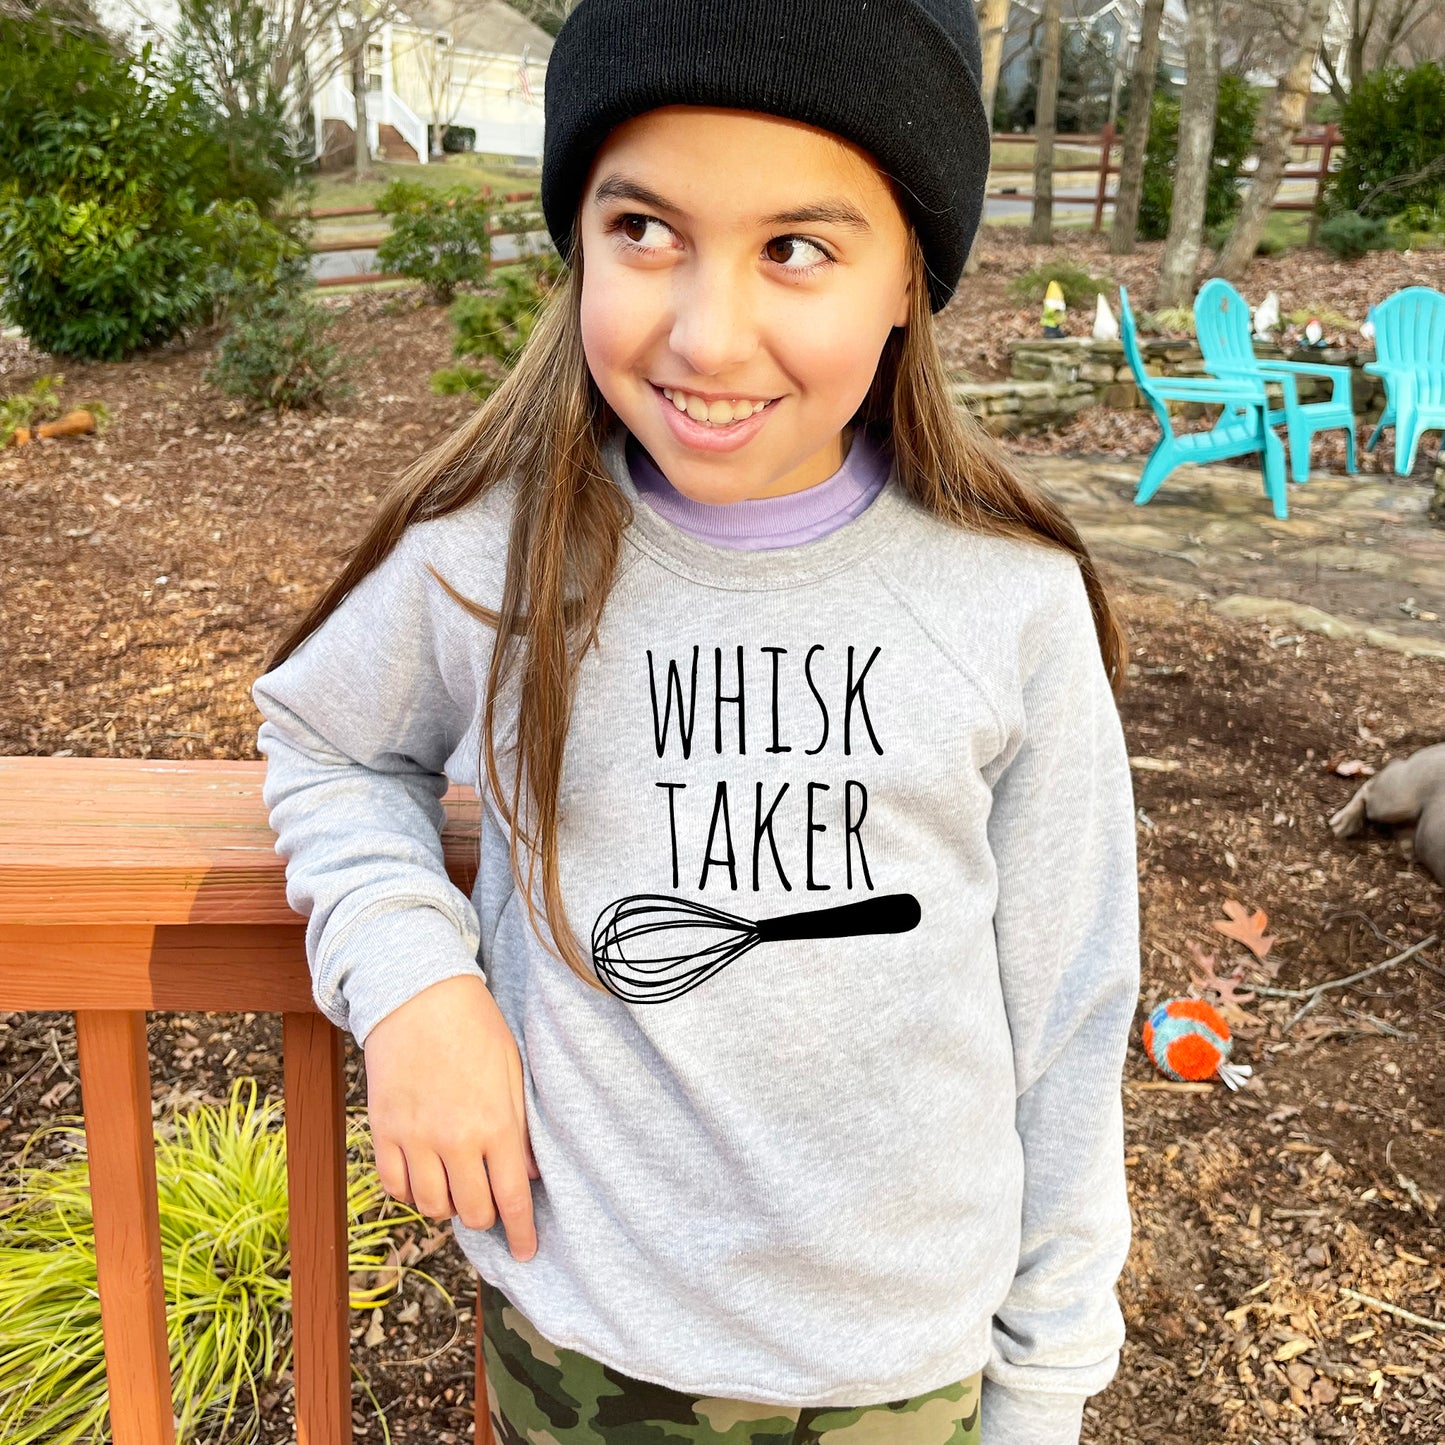 Whisk Taker (Baking) - Kid's Sweatshirt - Heather Gray or Mauve